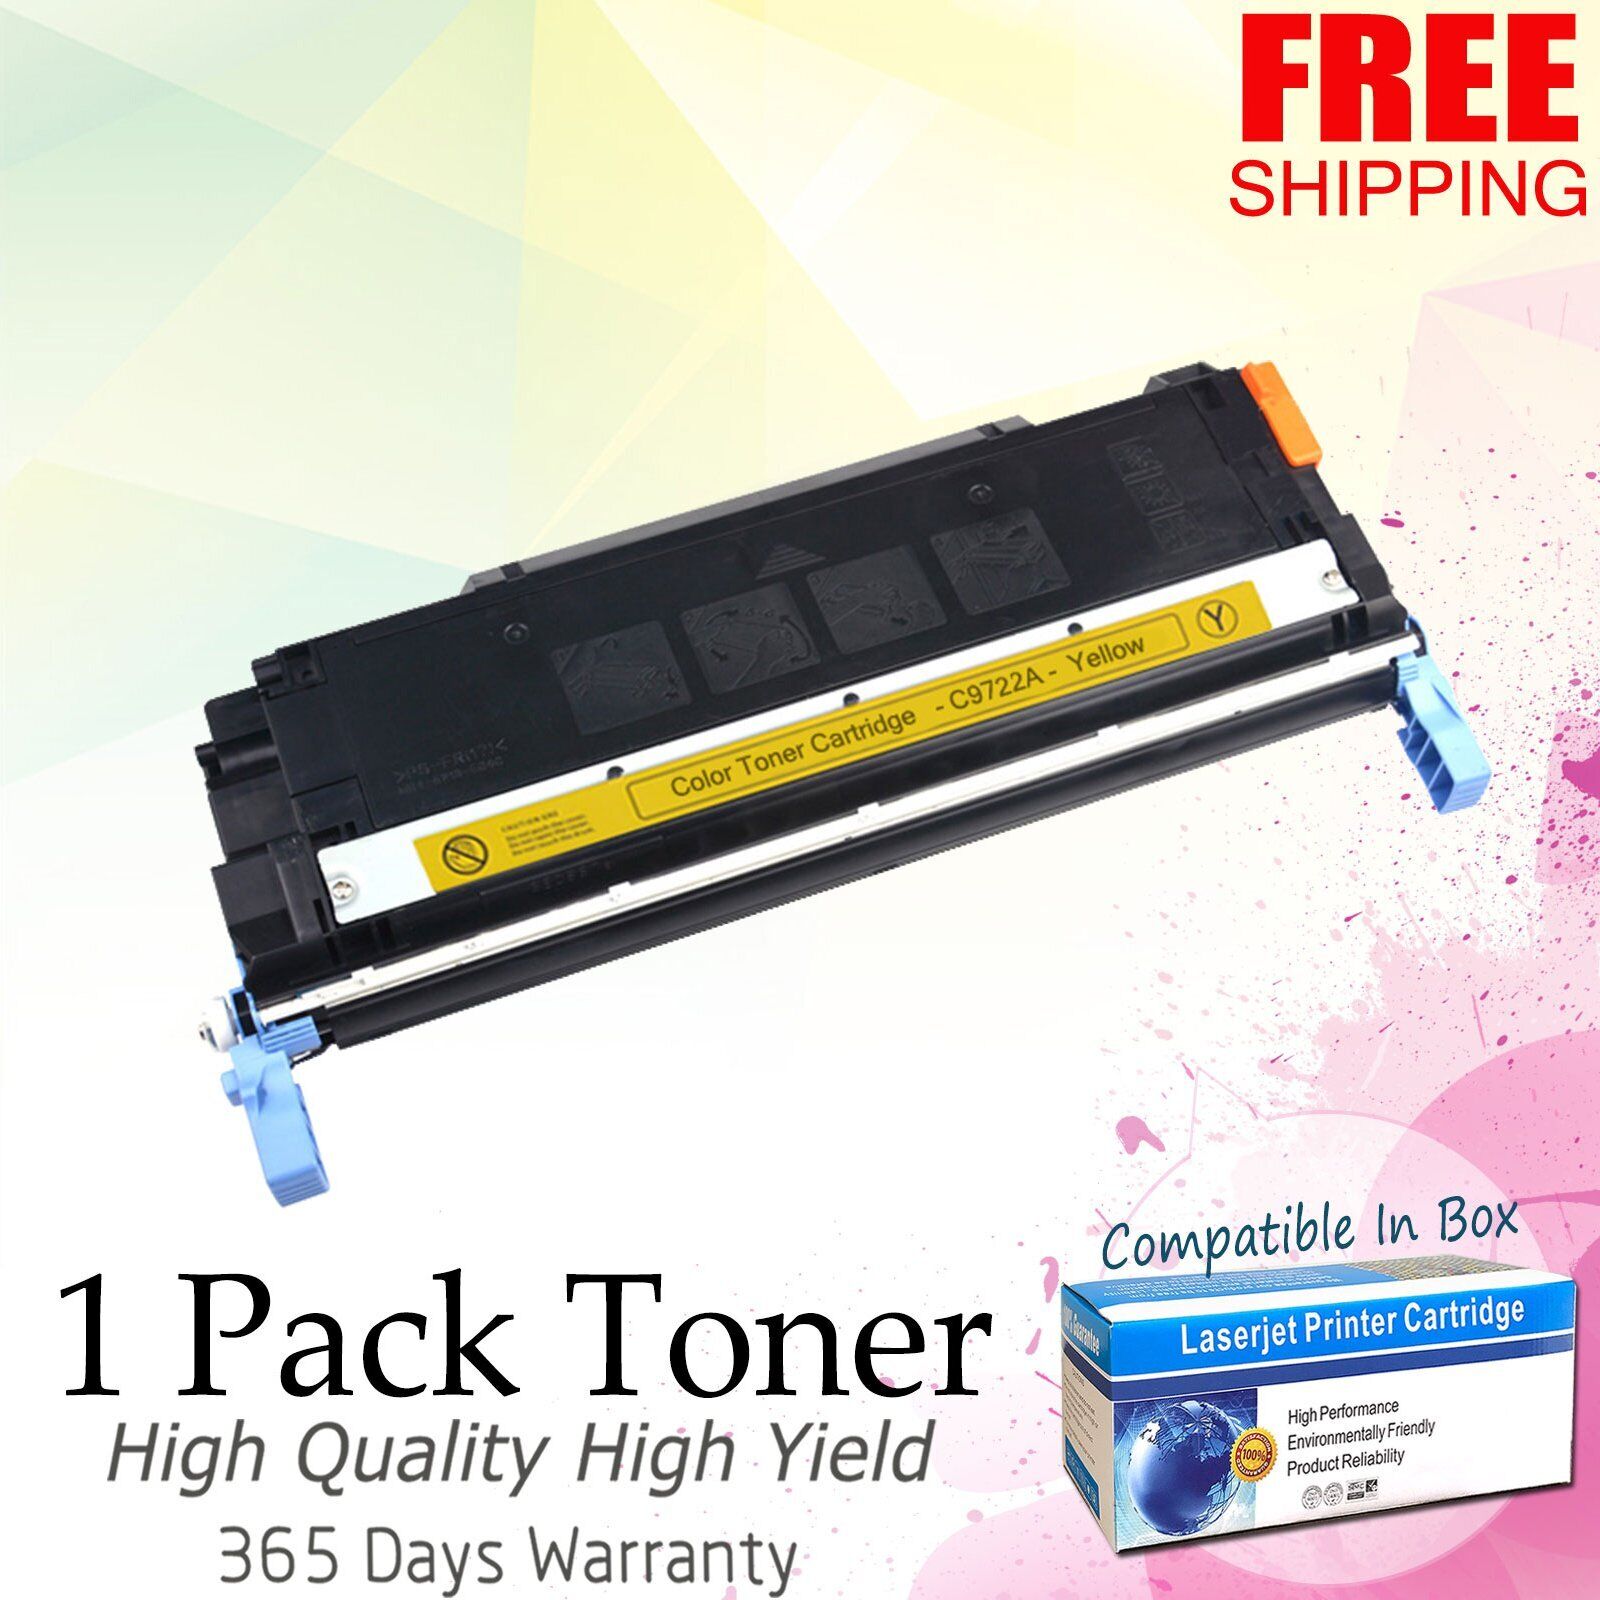 1PK C9722A Yellow Toner Cartridge For HP LaserJet 4600 4600DN 4600DTN 4610 4650